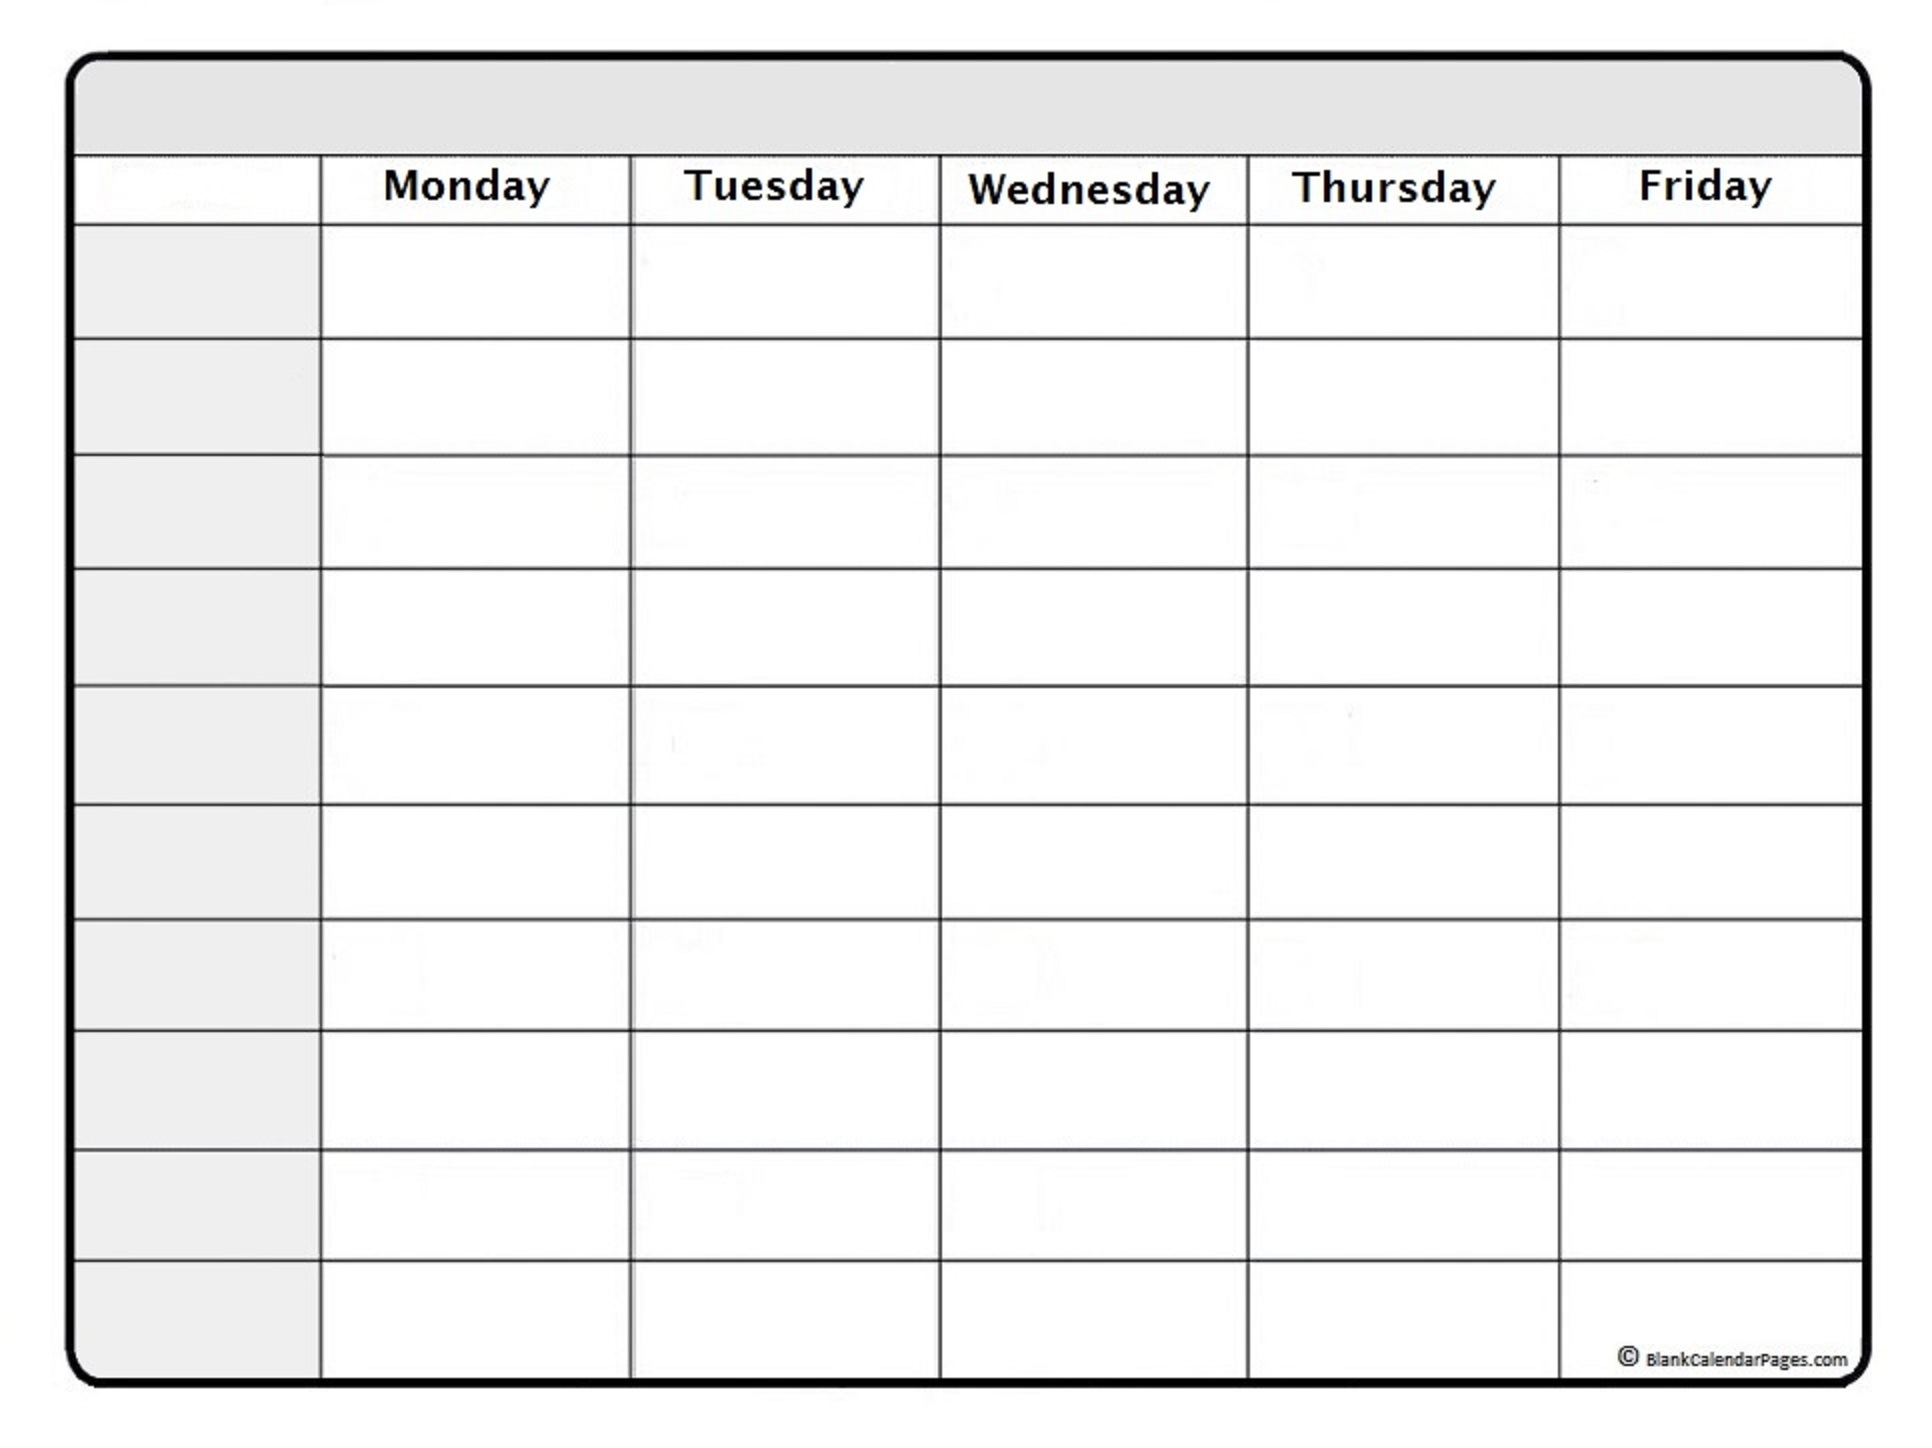 January 2020 Weekly Calendar | January 2020 Weekly Calendar Dashing One Week Calendar Printable Blank